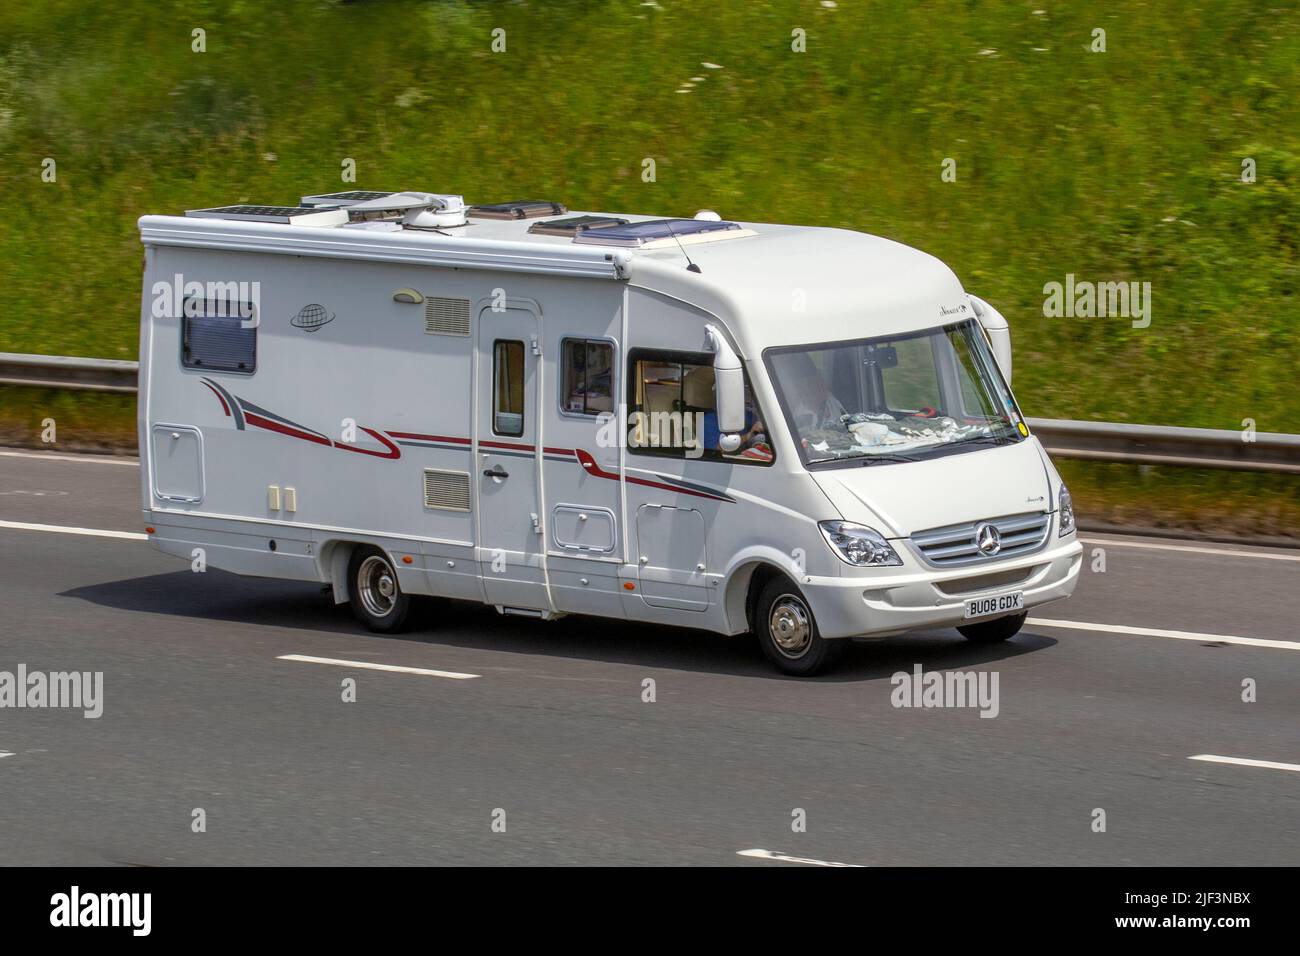 Mercedes benz camper van hi-res stock photography and images - Alamy